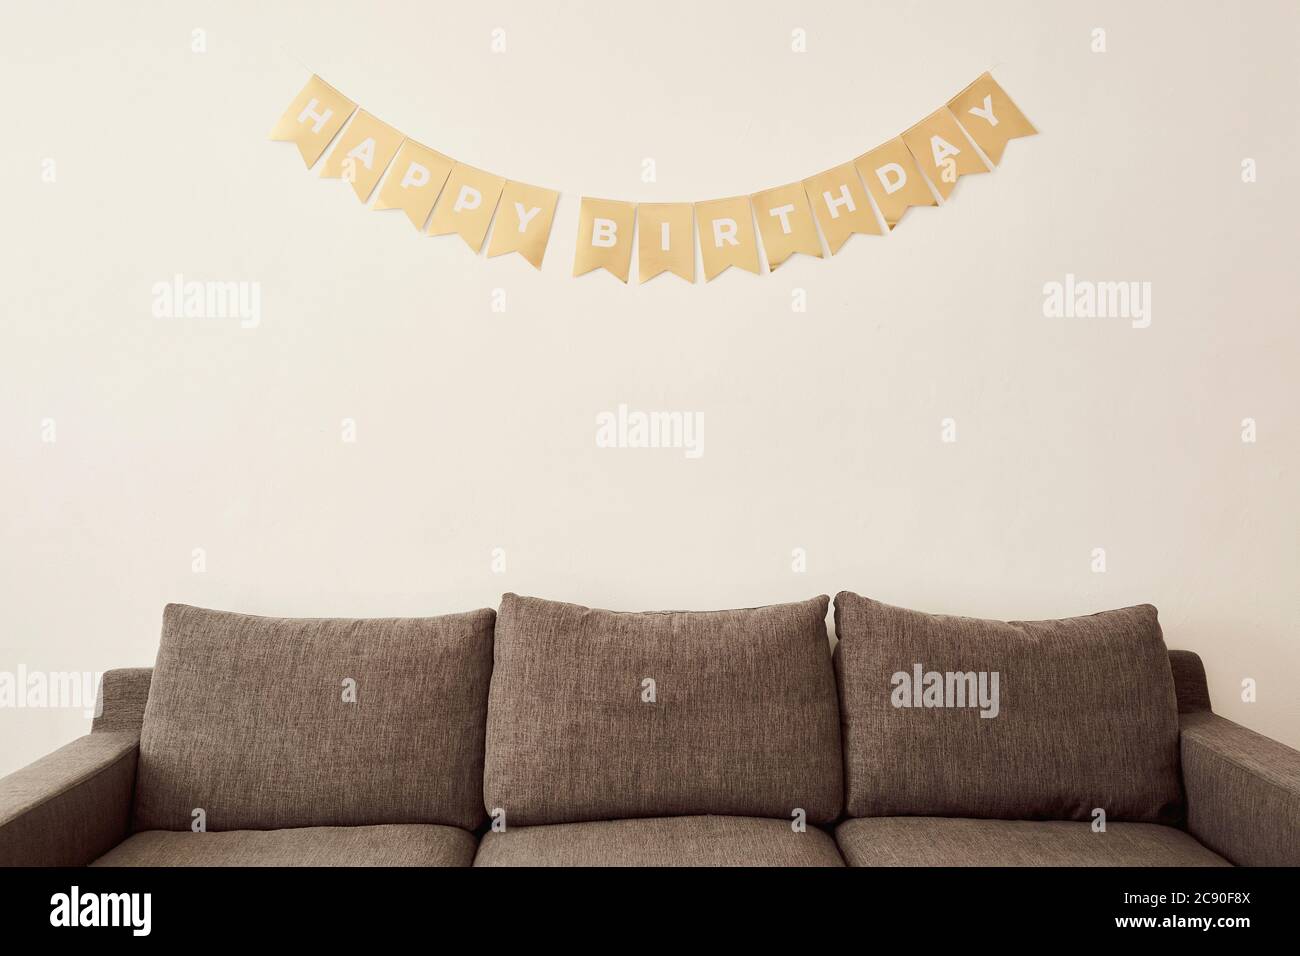 Happy birthday wishes on wall above sofa Stock Photo